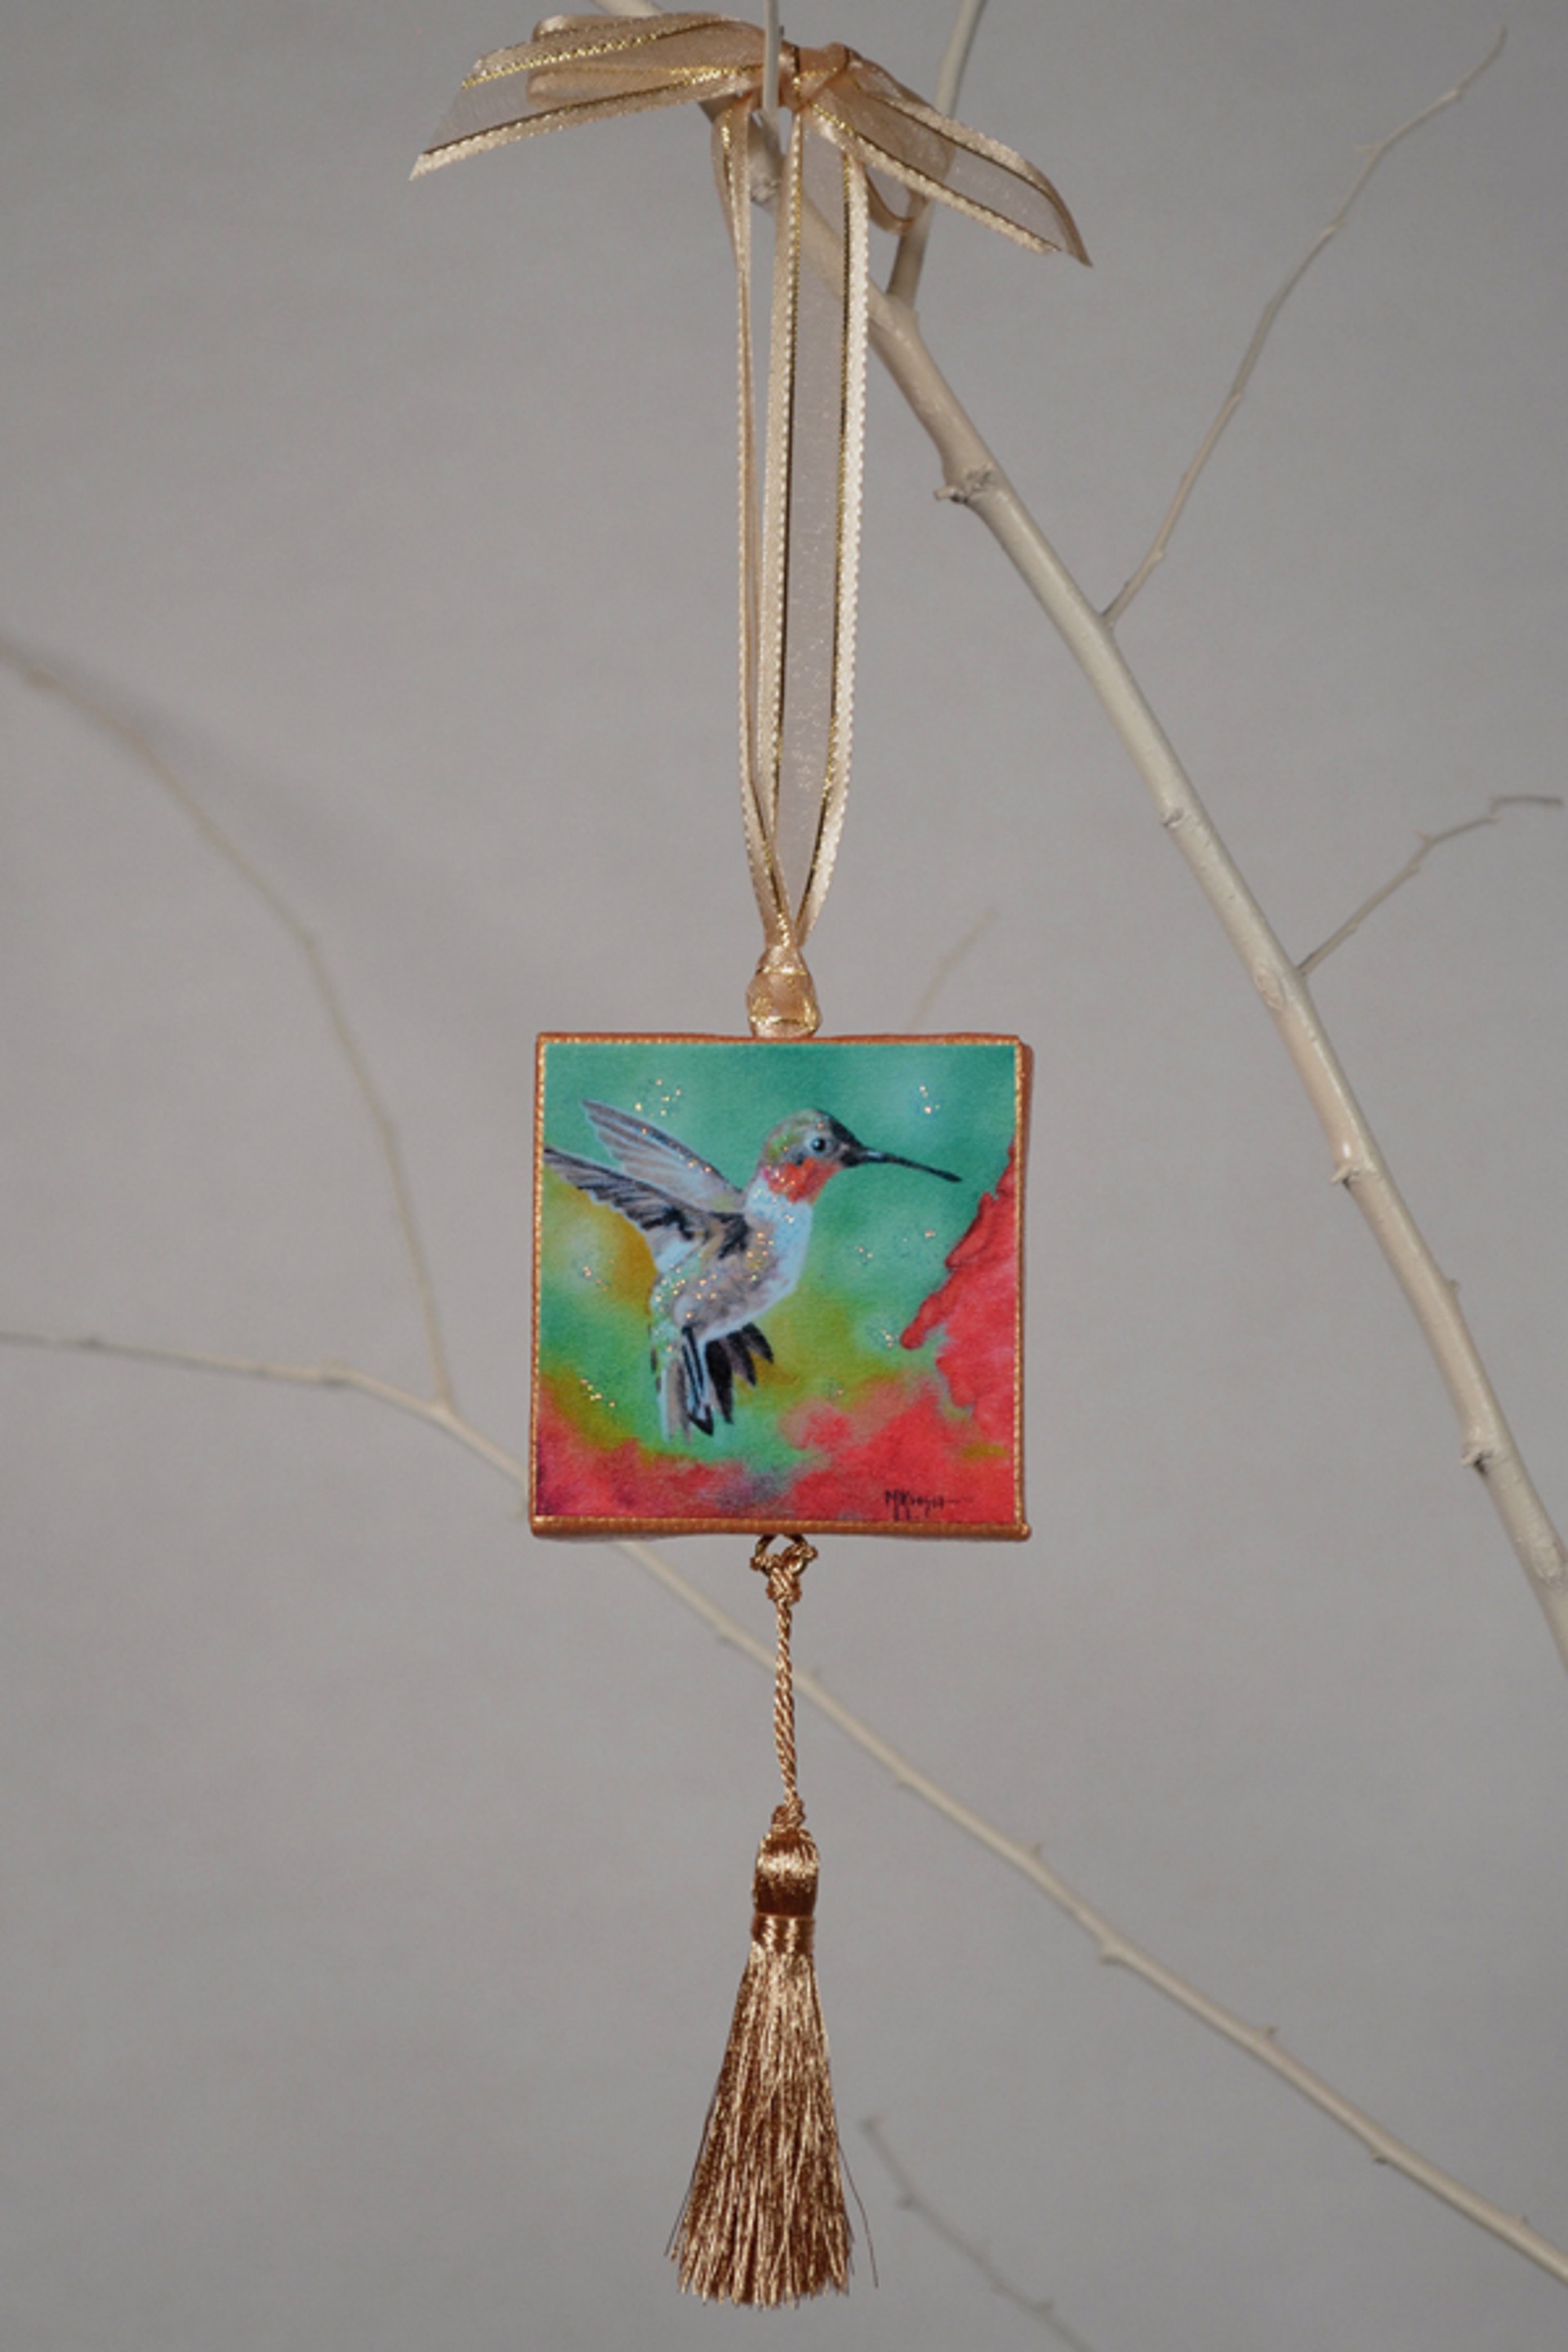 Ruby-Throated Hummingbird by Marie Kash Weltzheimer